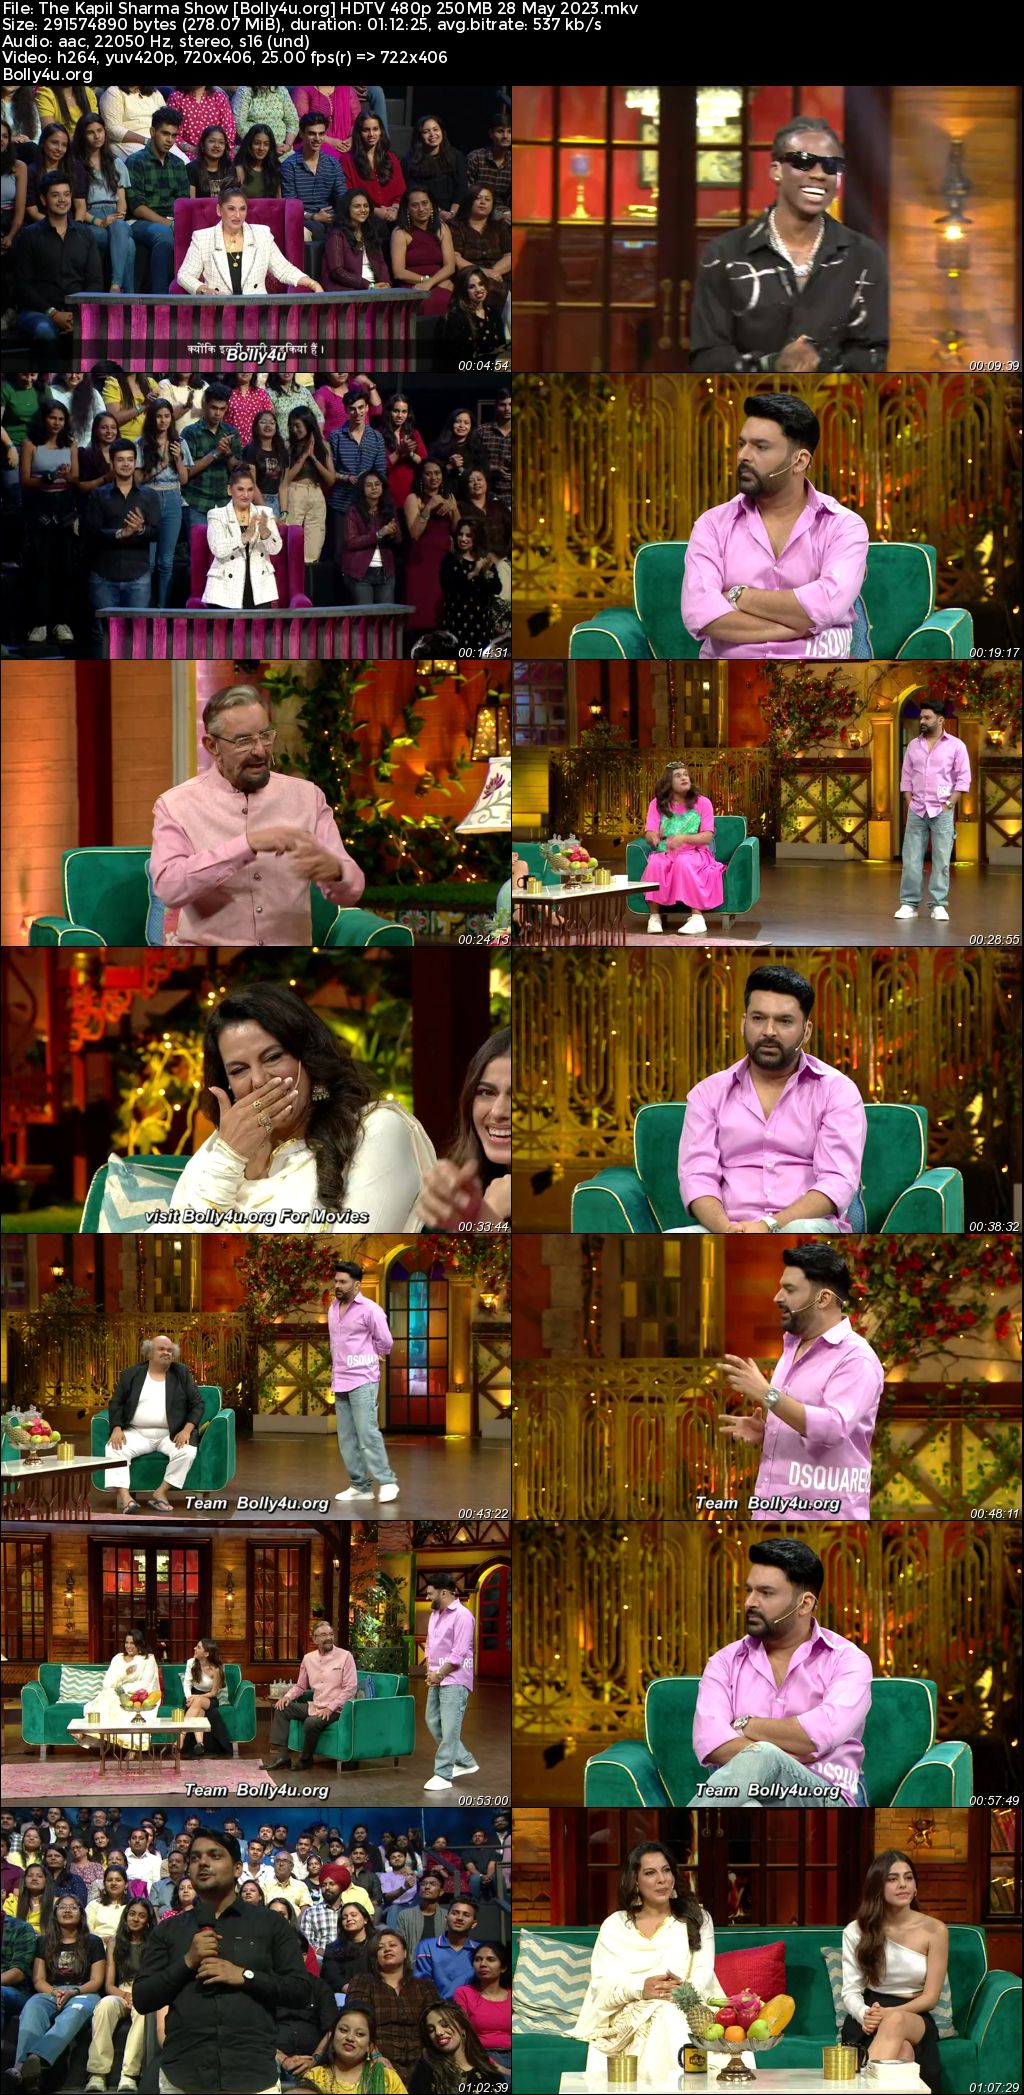 The Kapil Sharma Show HDTV 480p 250MB 28 May 2023 Download